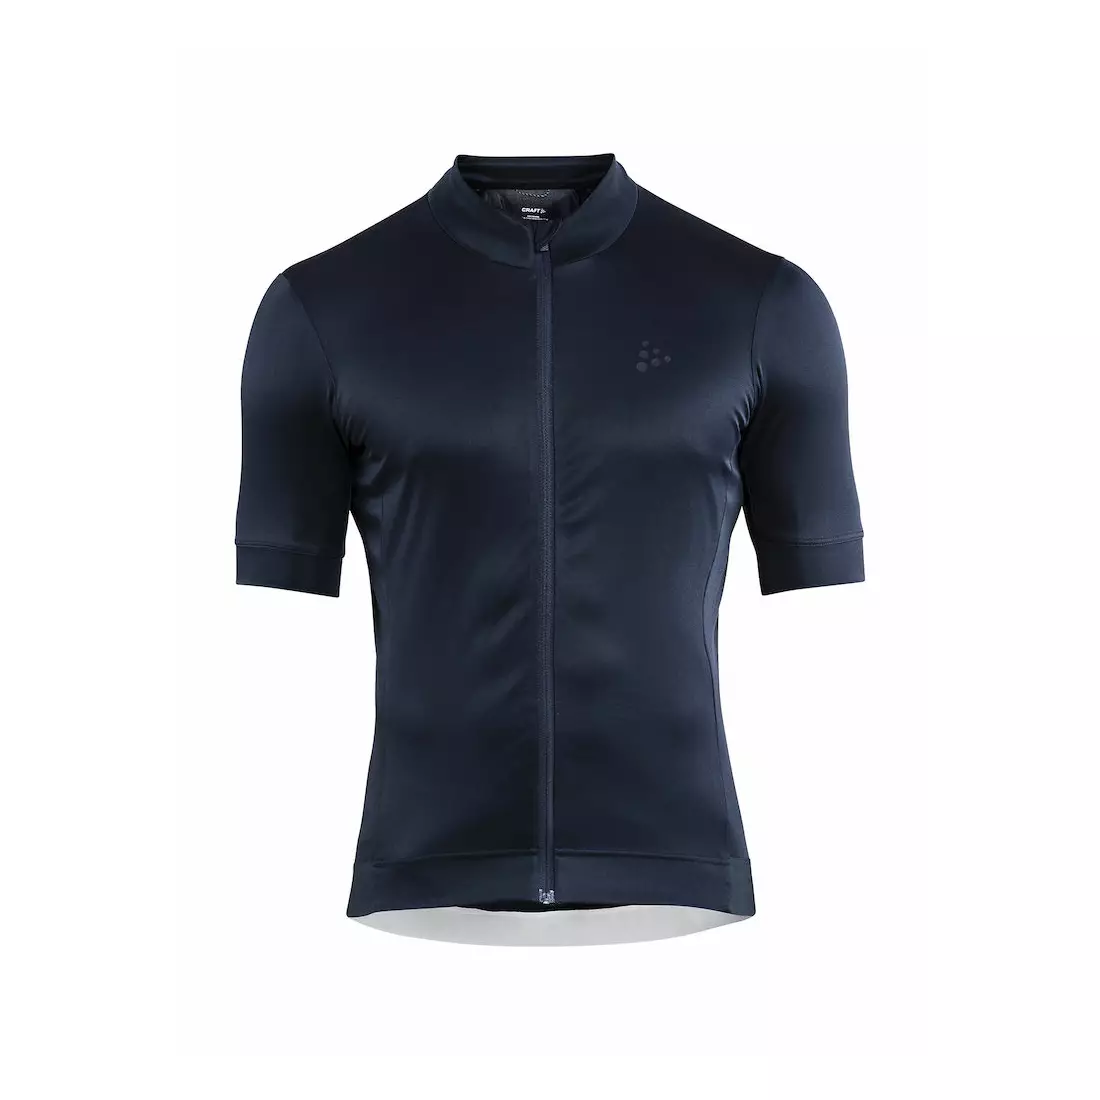 CRAFT ESSENCE men's cycling jersey navy blue 1907156-396000